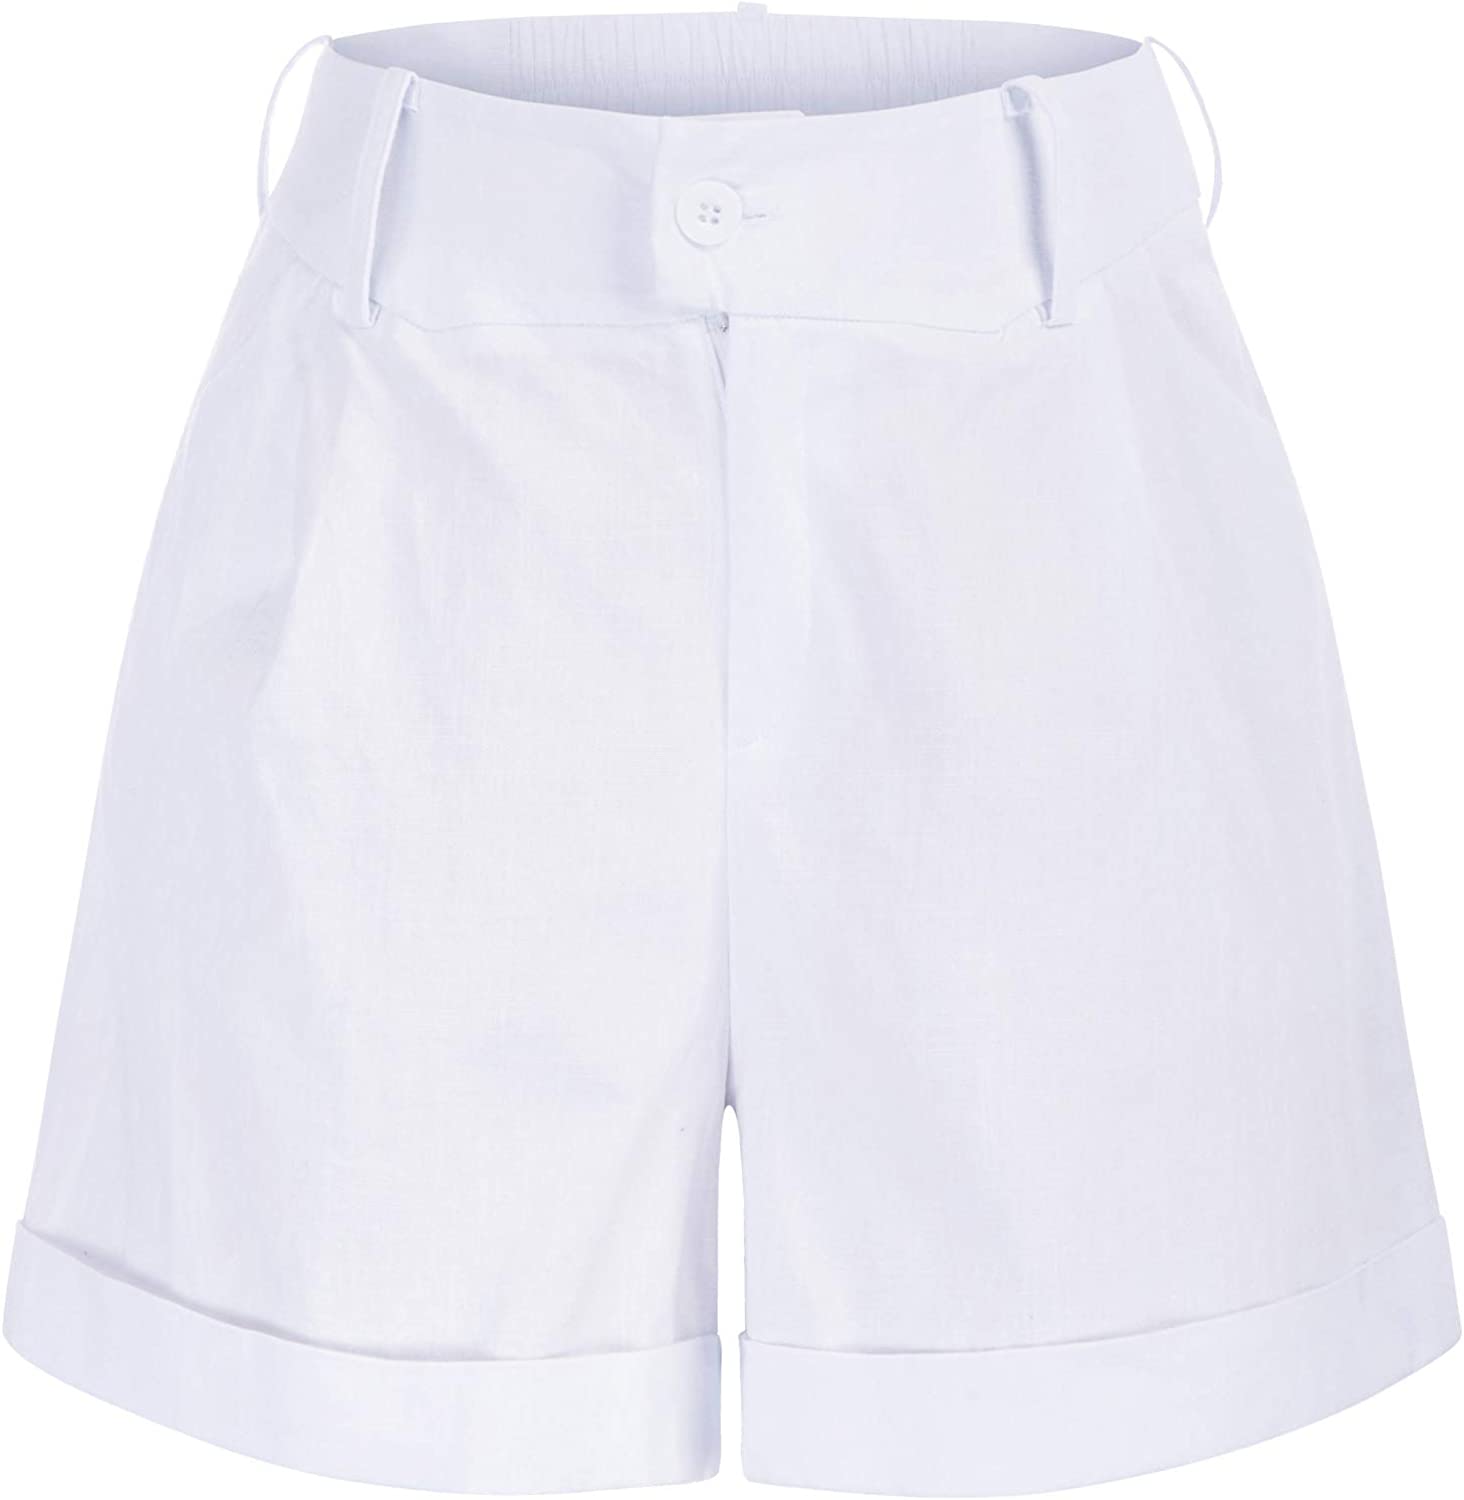 Belle Poque Women Summer Linen Shorts Elastic High Waisted Shorts with Pockets